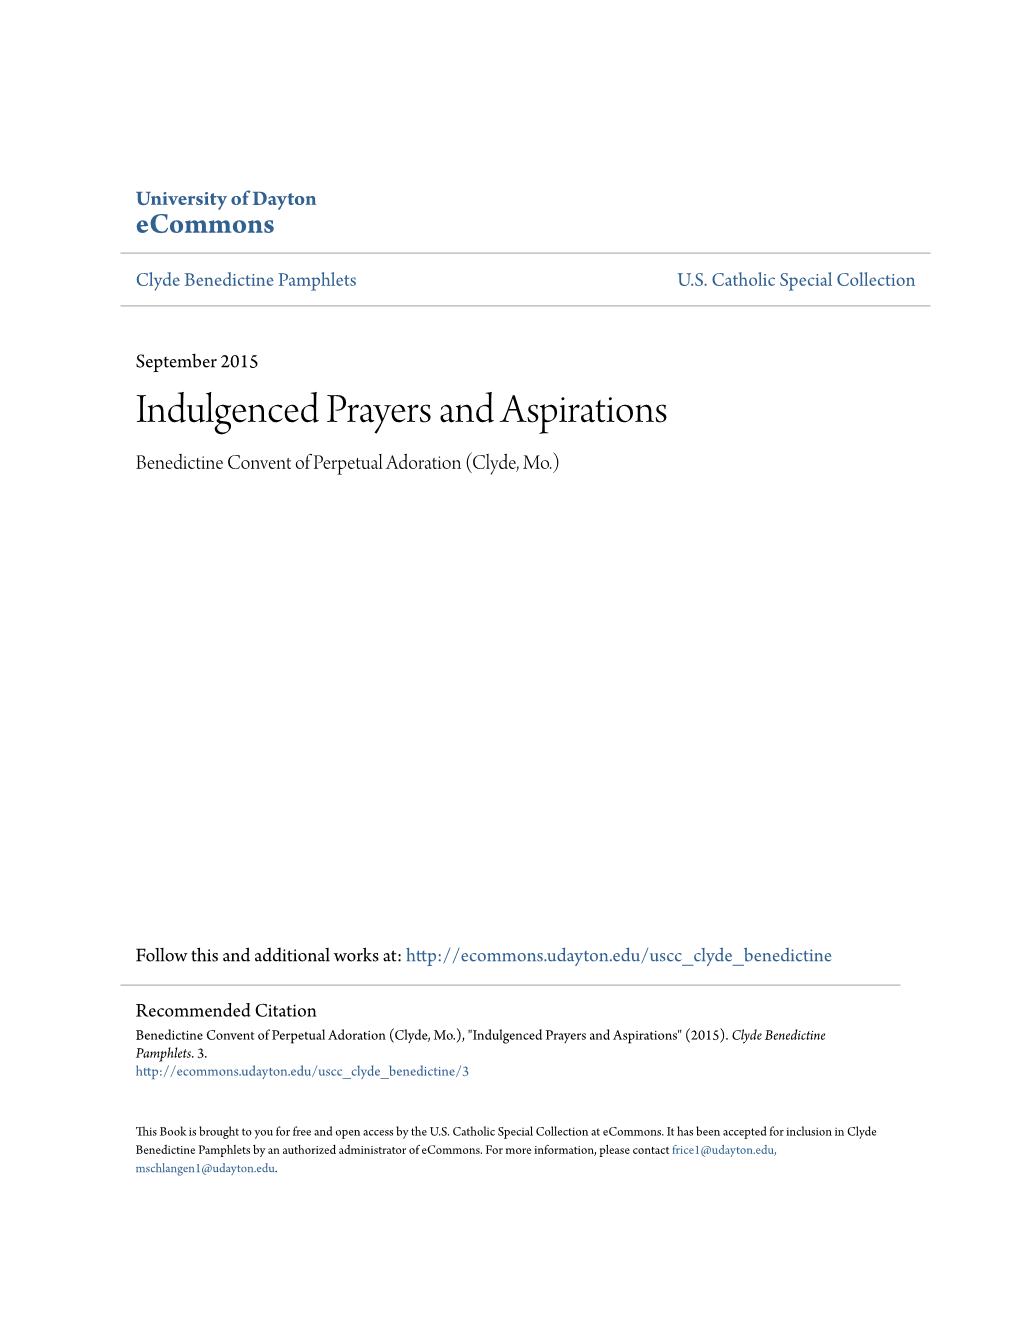 Indulgenced Prayers and Aspirations Benedictine Convent of Perpetual Adoration (Clyde, Mo.)